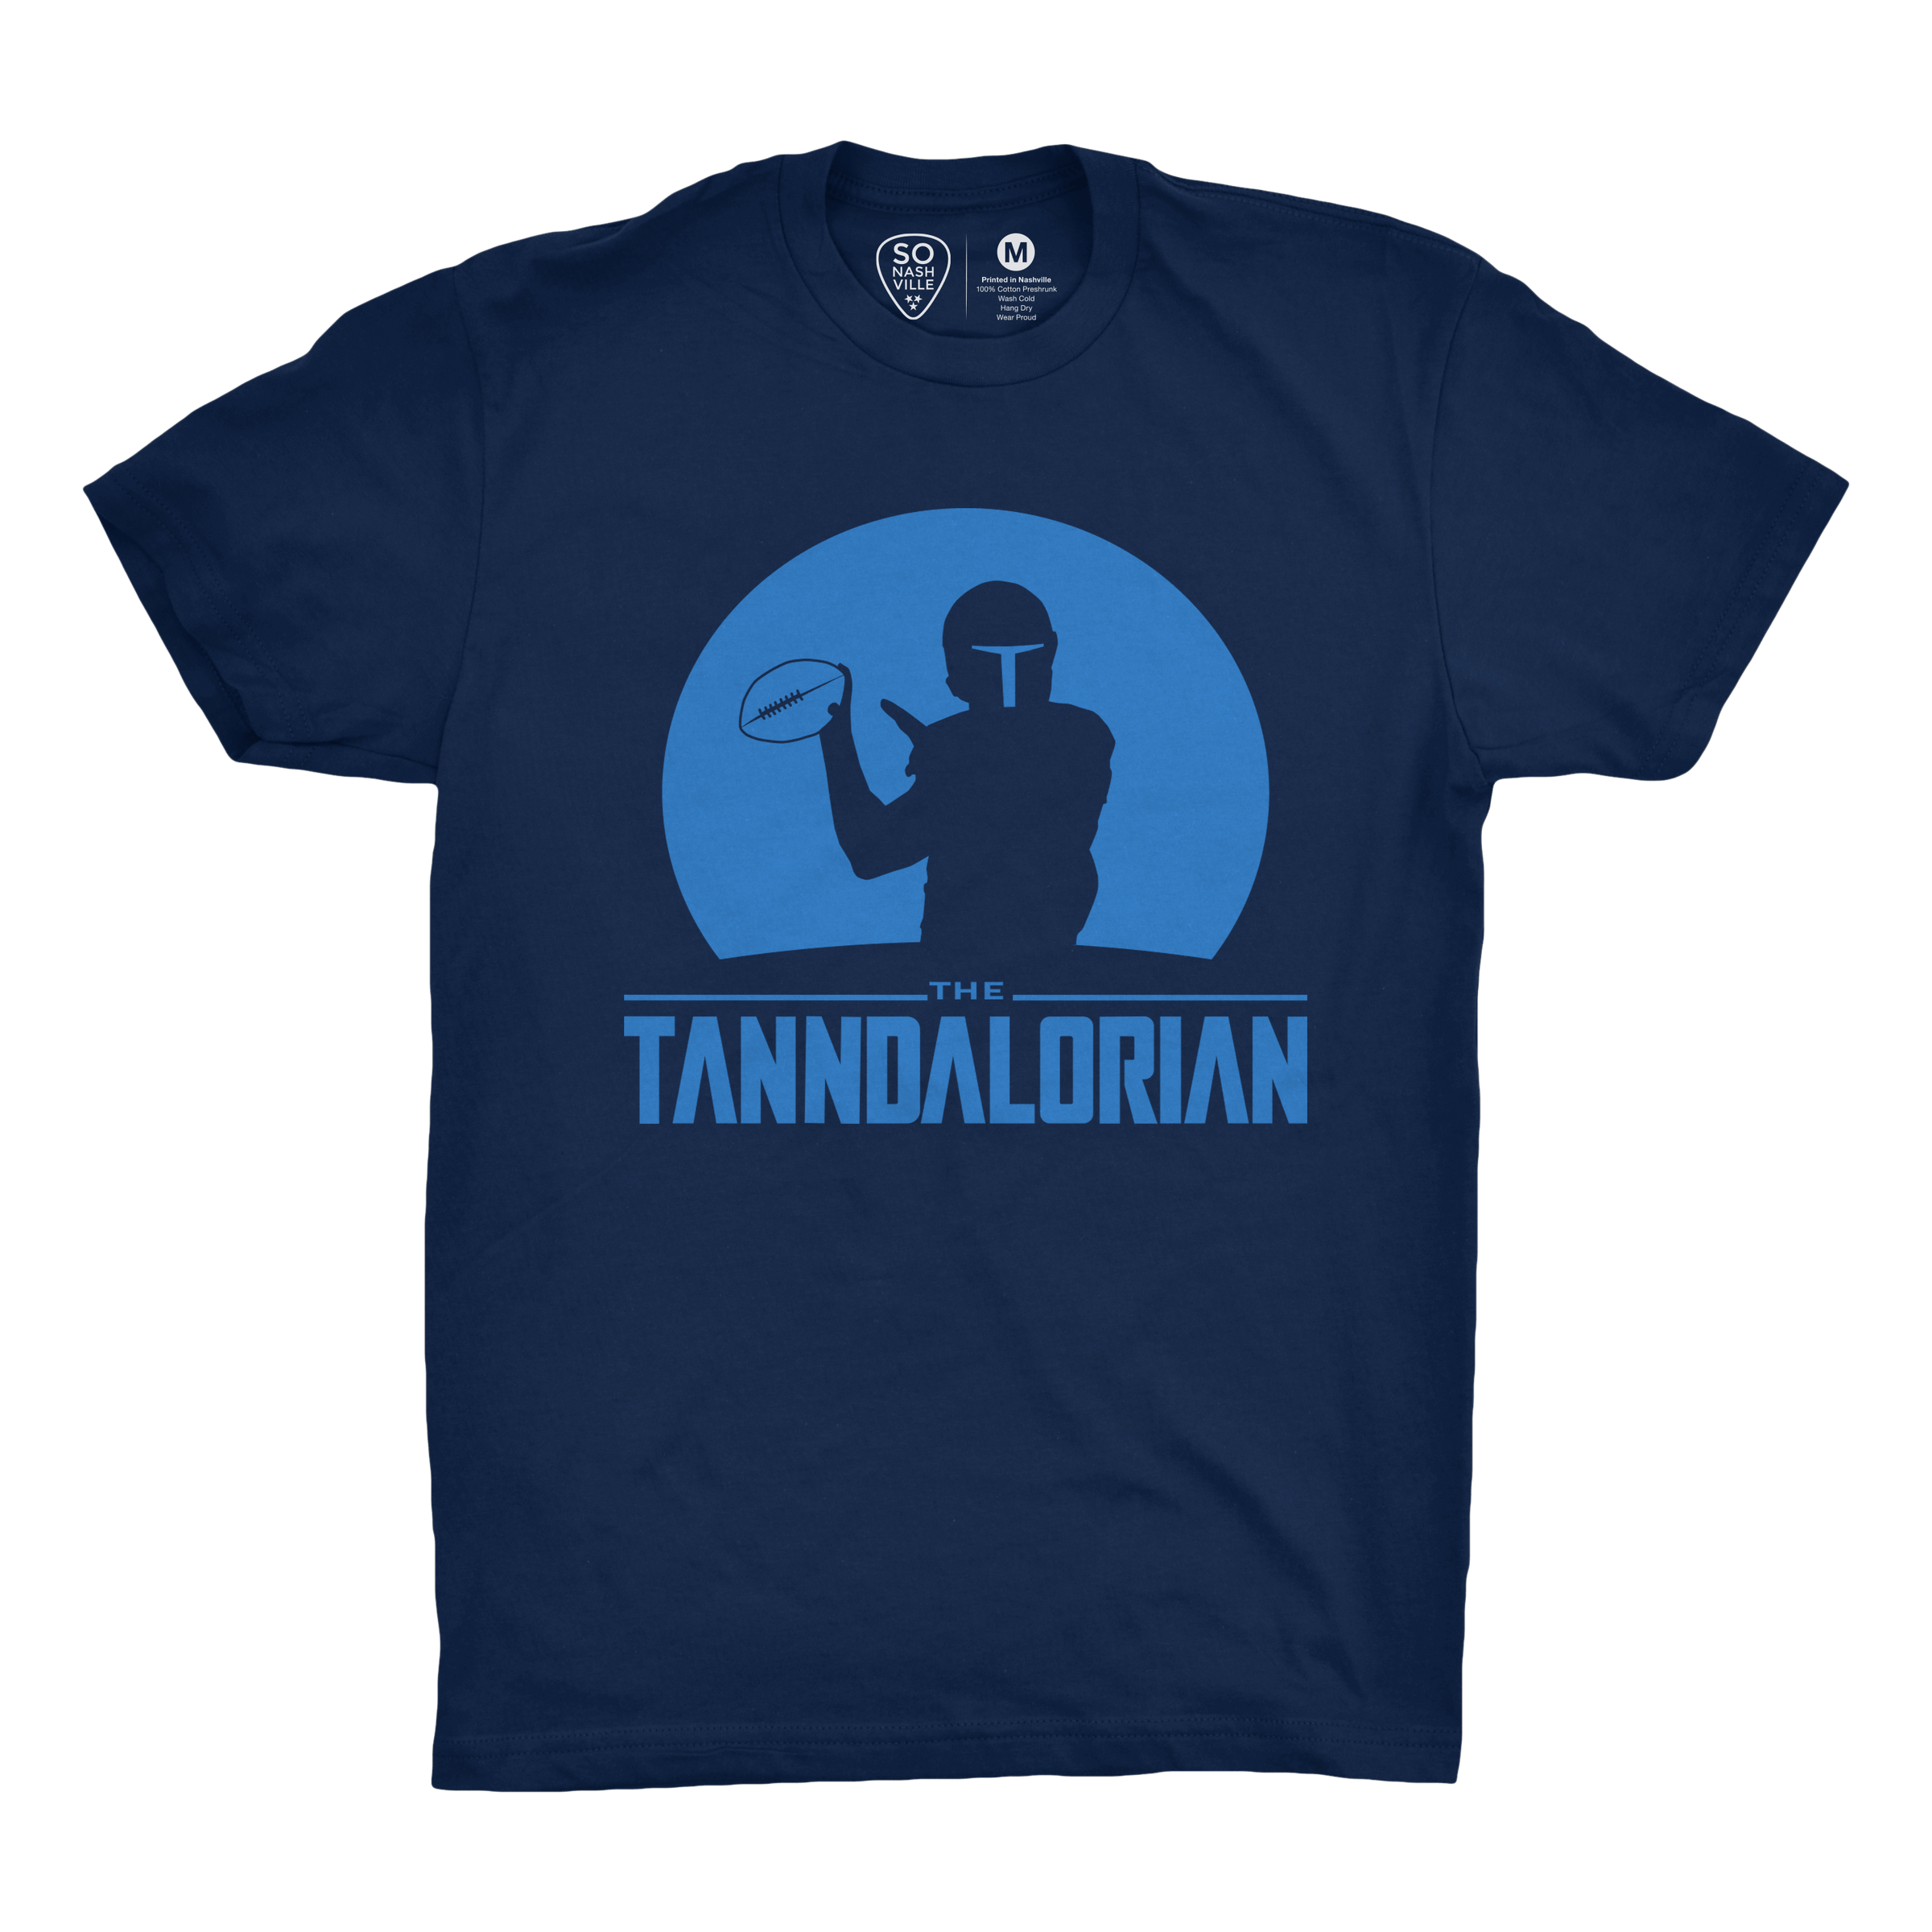 The TANNDALORIAN - So Nashville Clothing